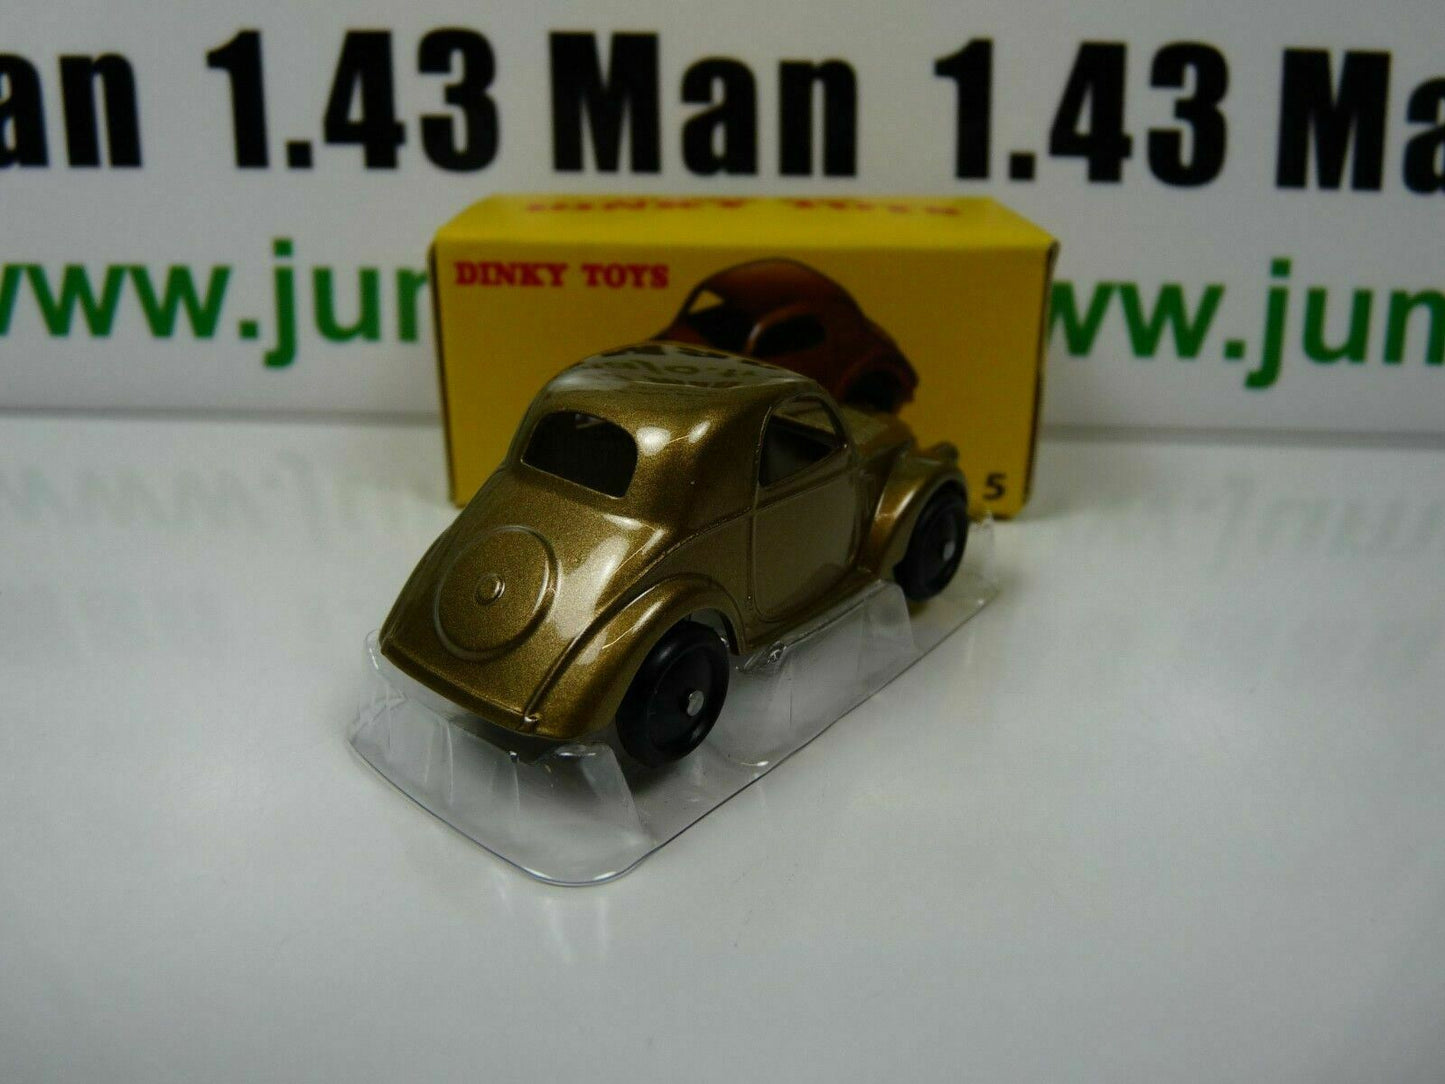 DT225 Voiture 1/43 réédition DINKY TOYS DeAgostini : Simca 5 Fiat Topolino bronze